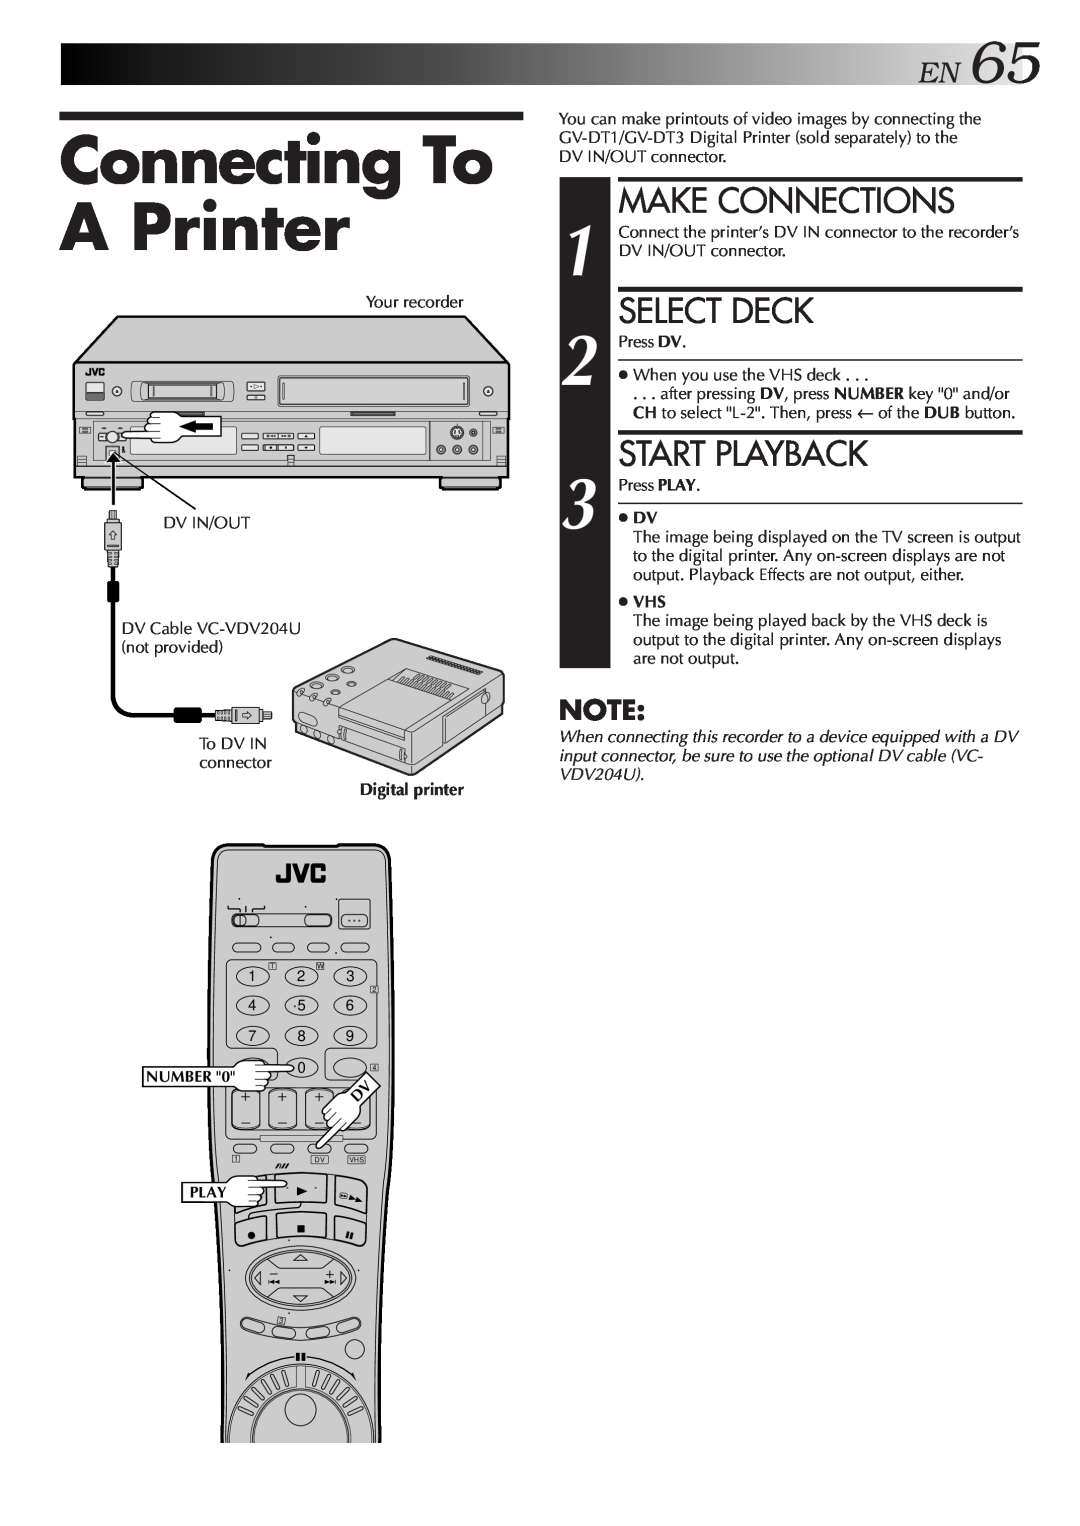 JVC Model HR-DVS1U manual Connecting To A Printer, EN65, Make Connections, Select Deck, Start Playback, Digital printer 